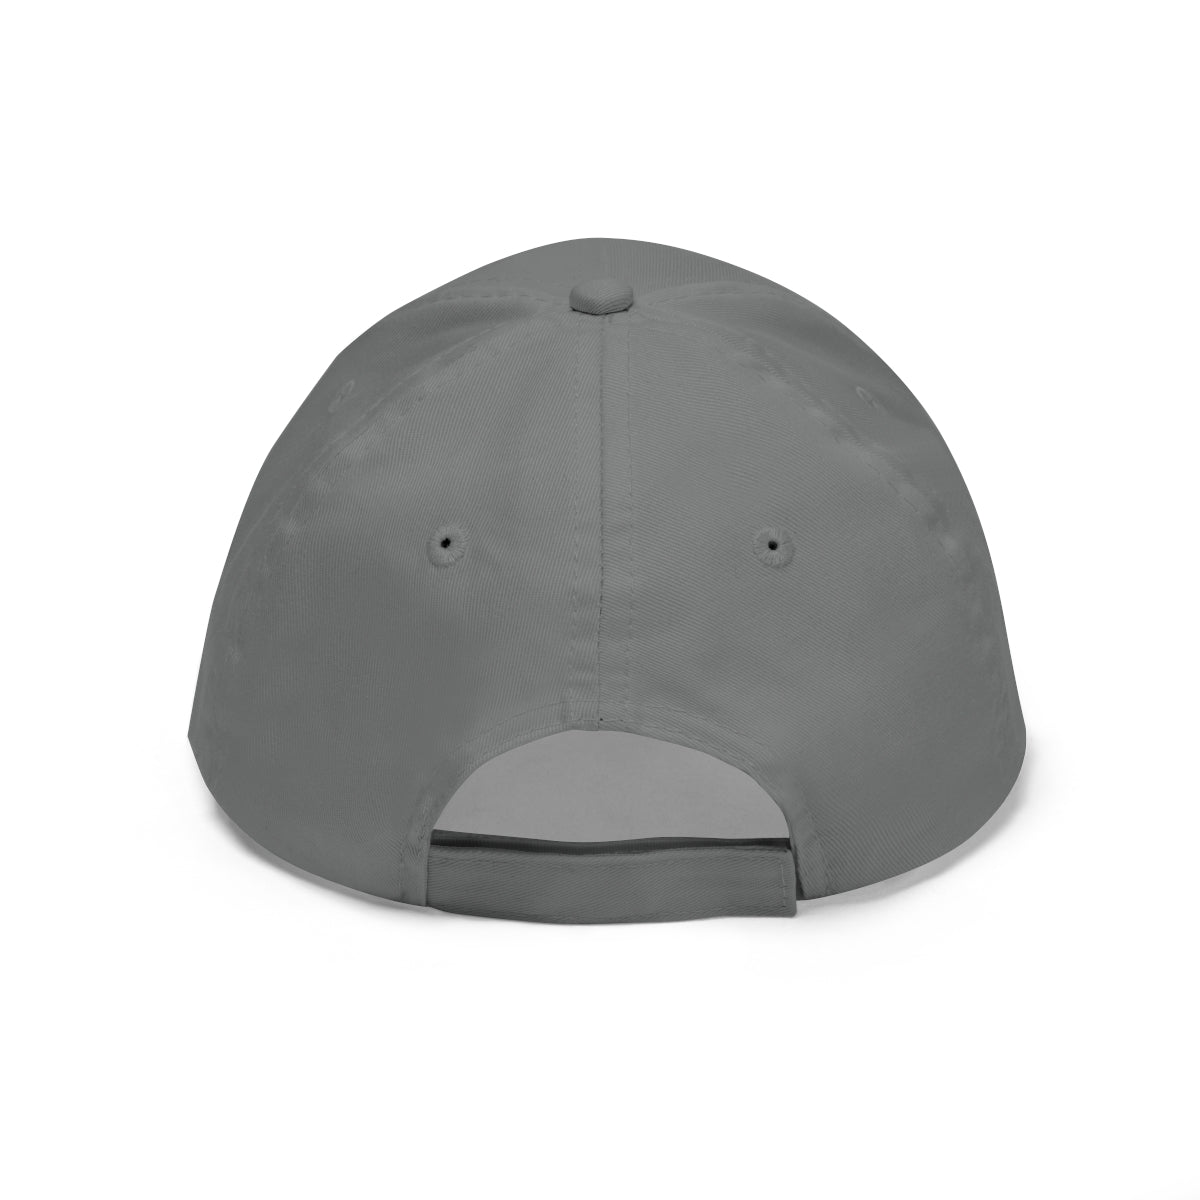 Violetann Tarot Logo - Unisex Twill Hat